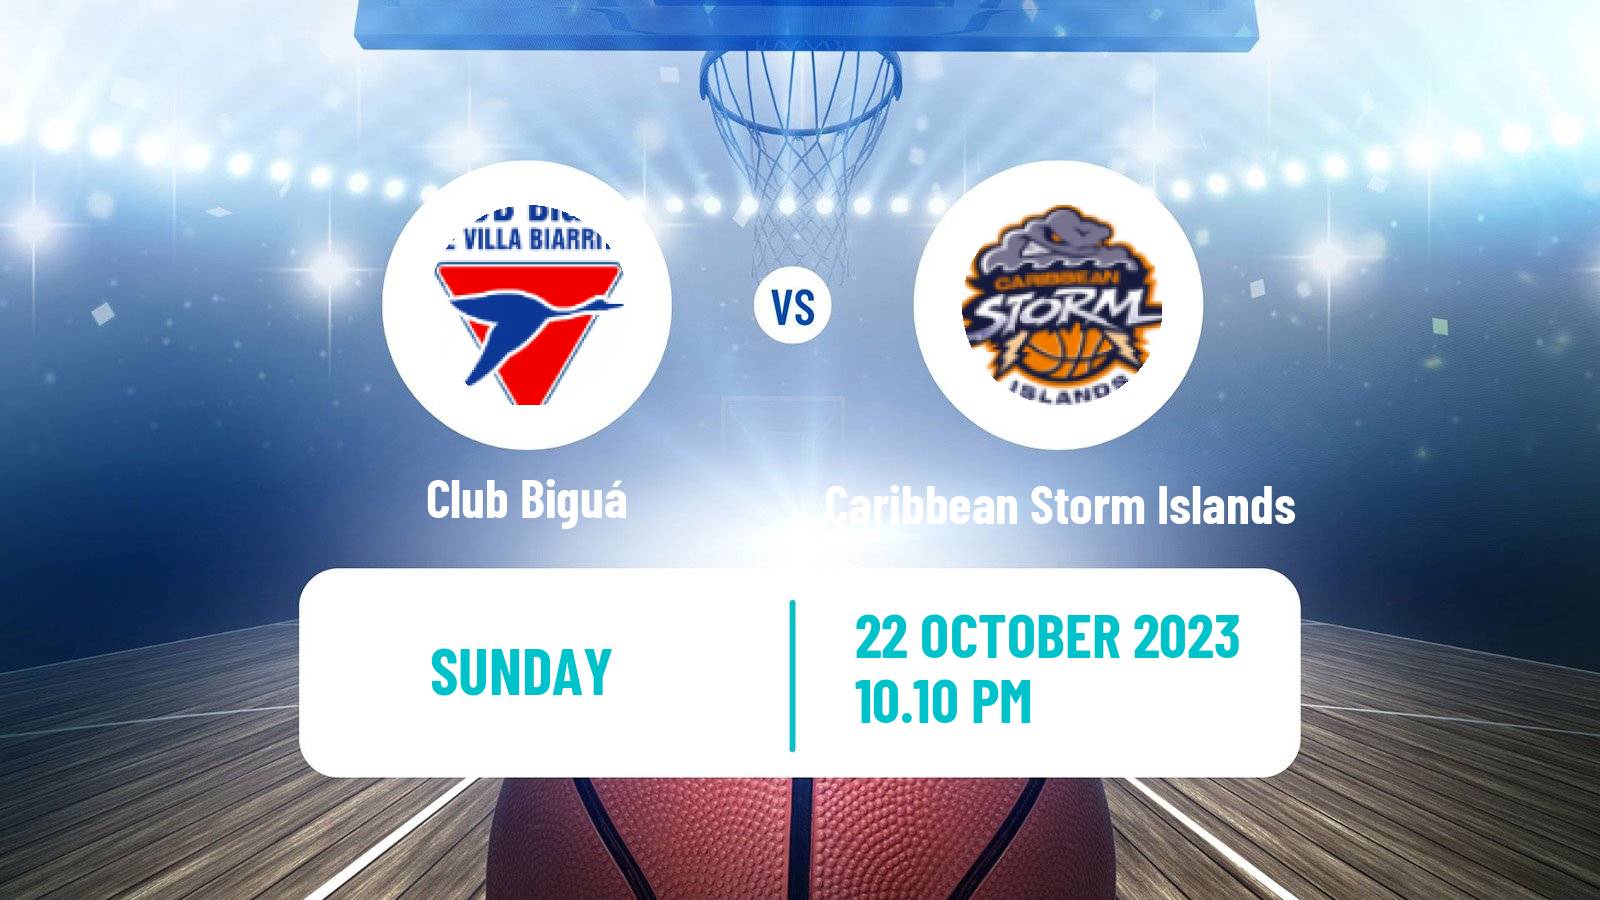 Basketball Basketball South American League Biguá - Caribbean Storm Islands